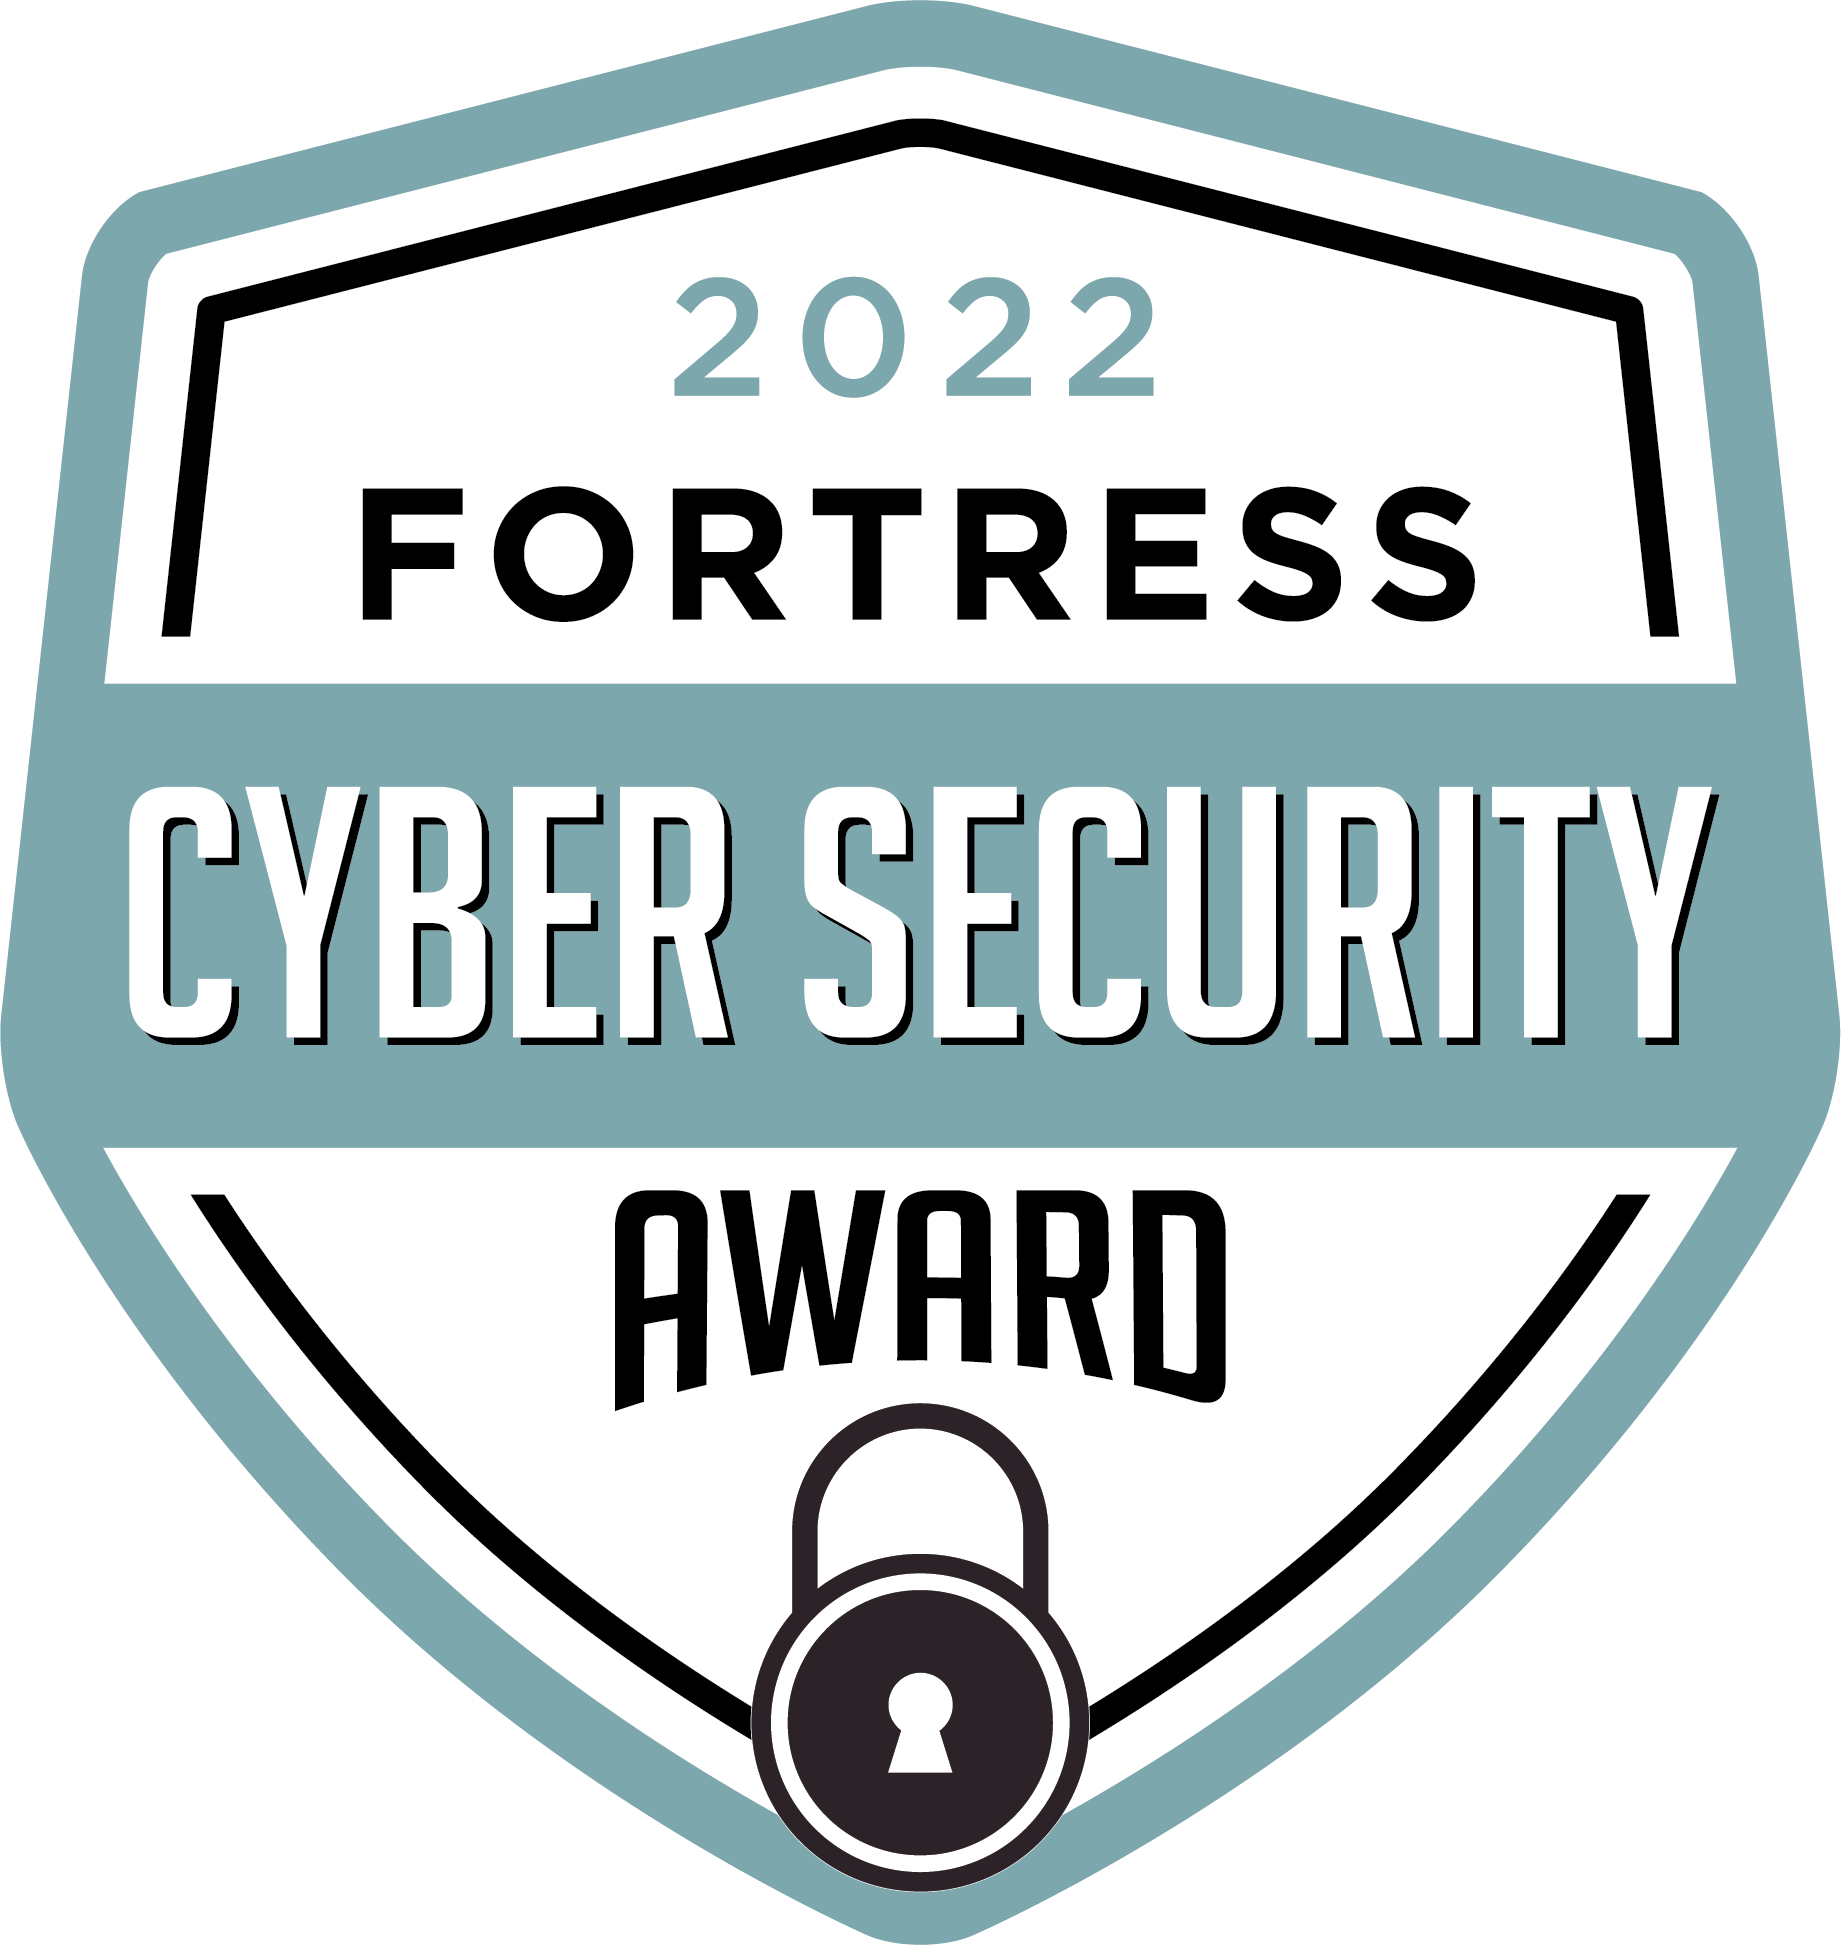 Fortress award